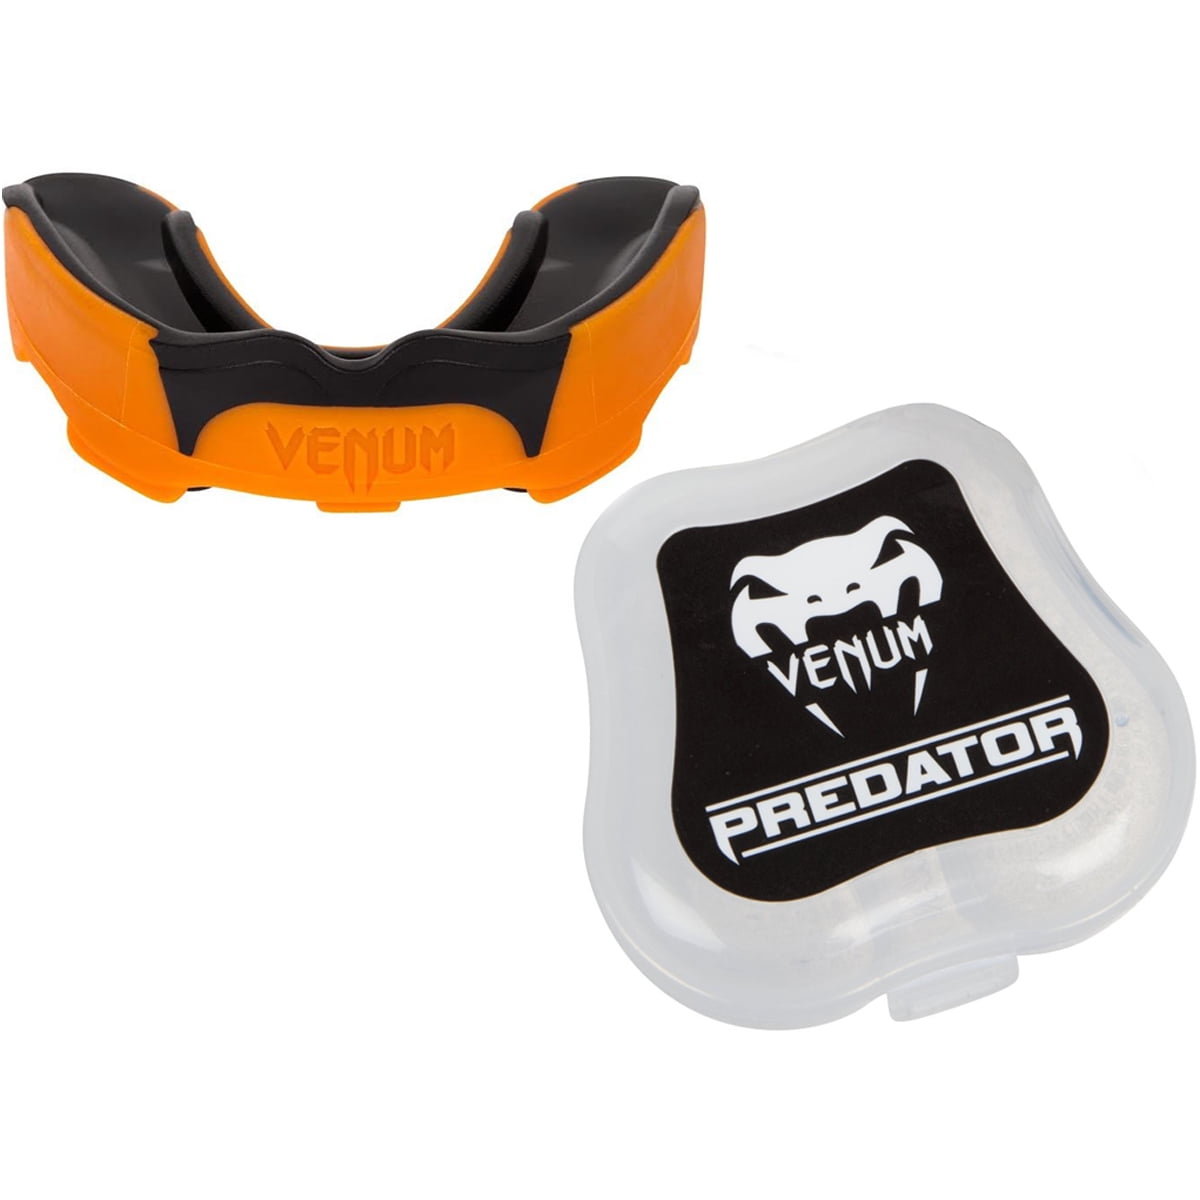 Protège-dents Venum Modèle: Predator Mouthguard